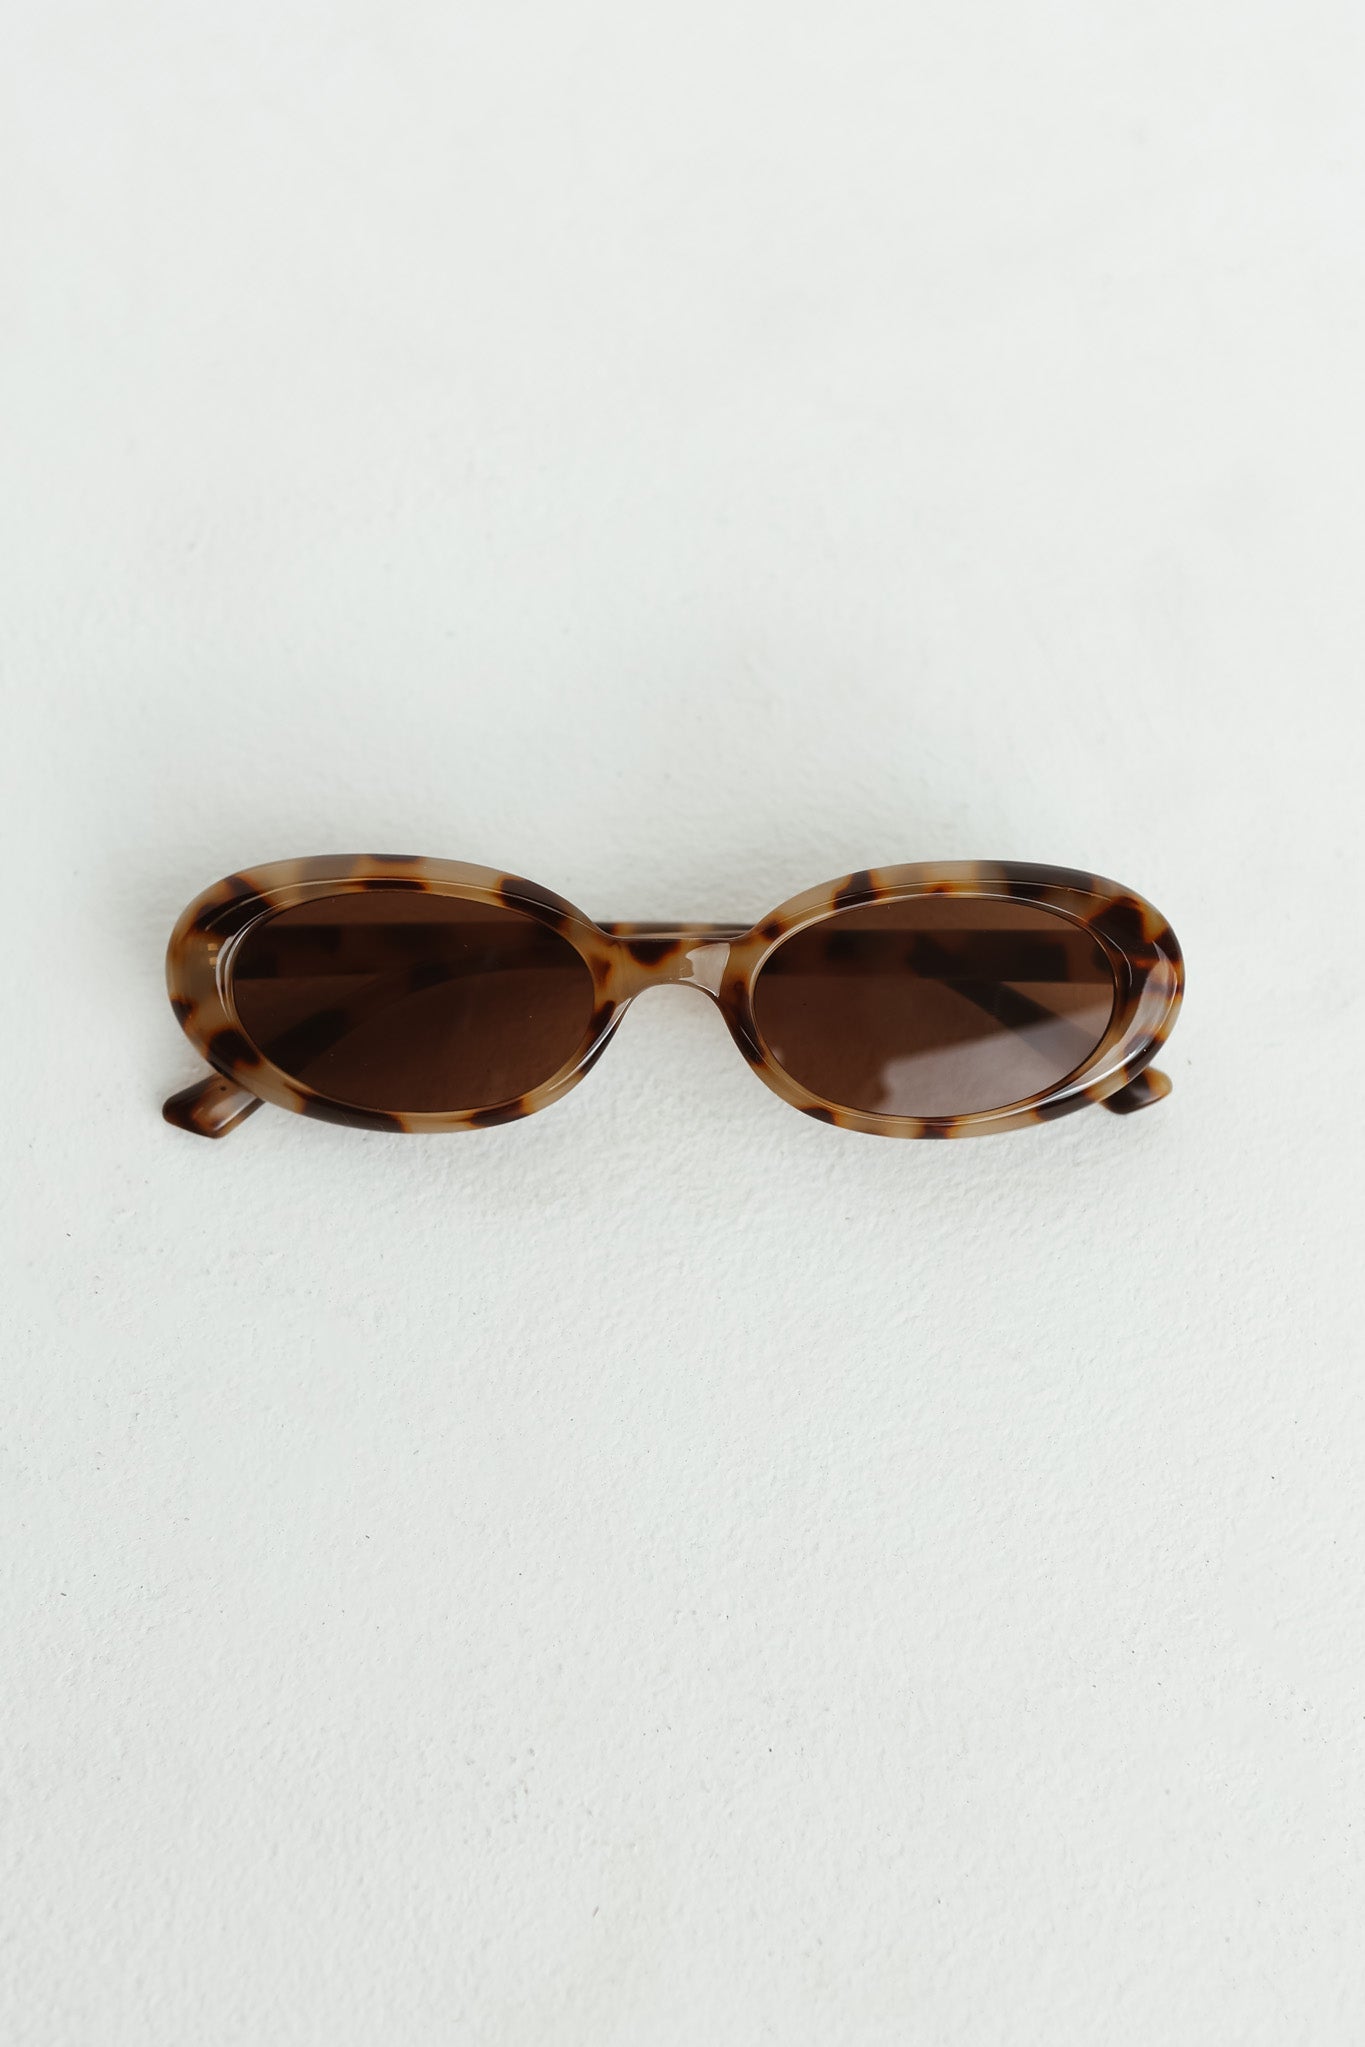 Lenny Sunglasses (Brown)